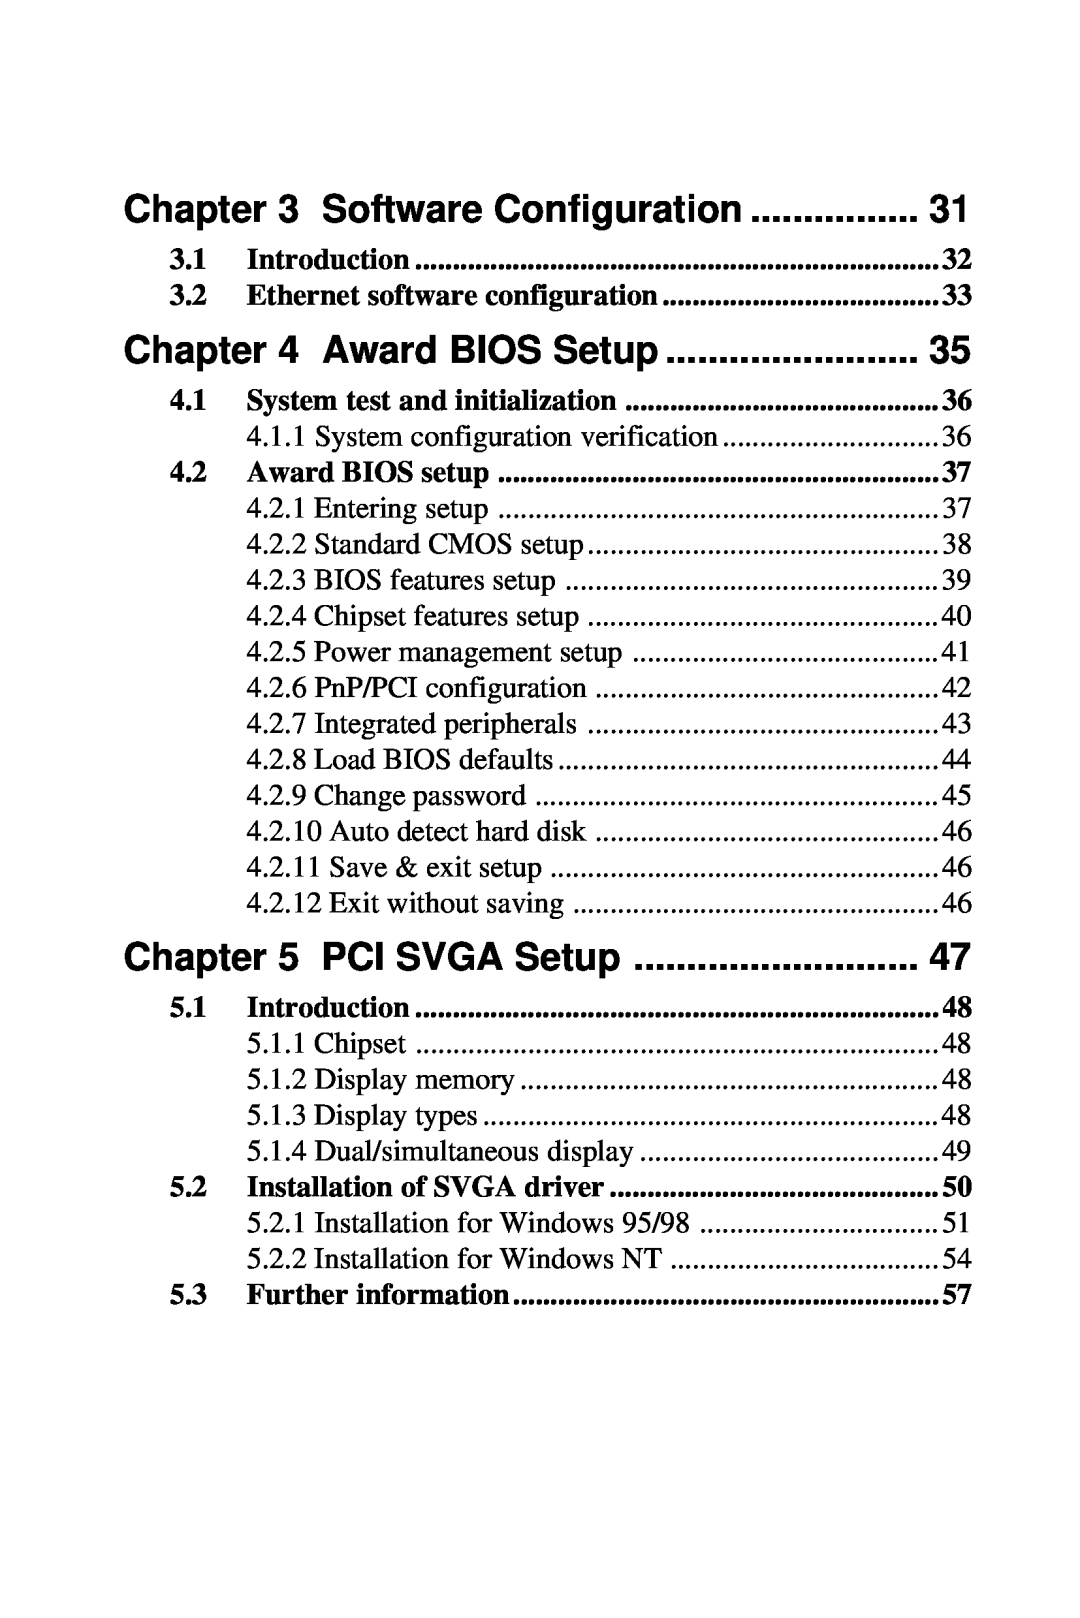 Advantech 2006957006 5th Edition user manual Software Configuration, Award BIOS Setup, PCI SVGA Setup 